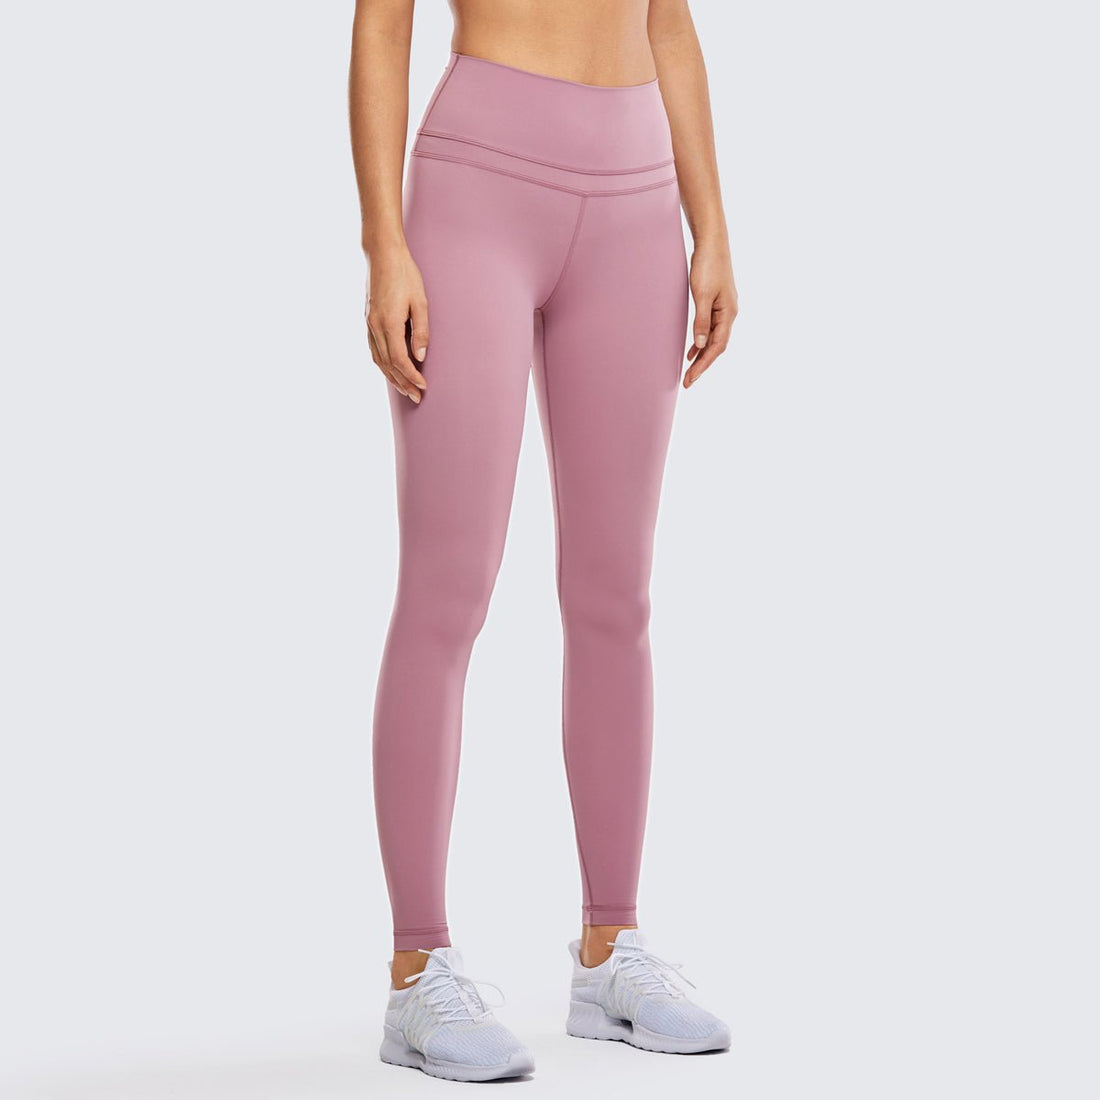 High Rise Seamless Pink Full Length Workout Leggings - 0cm